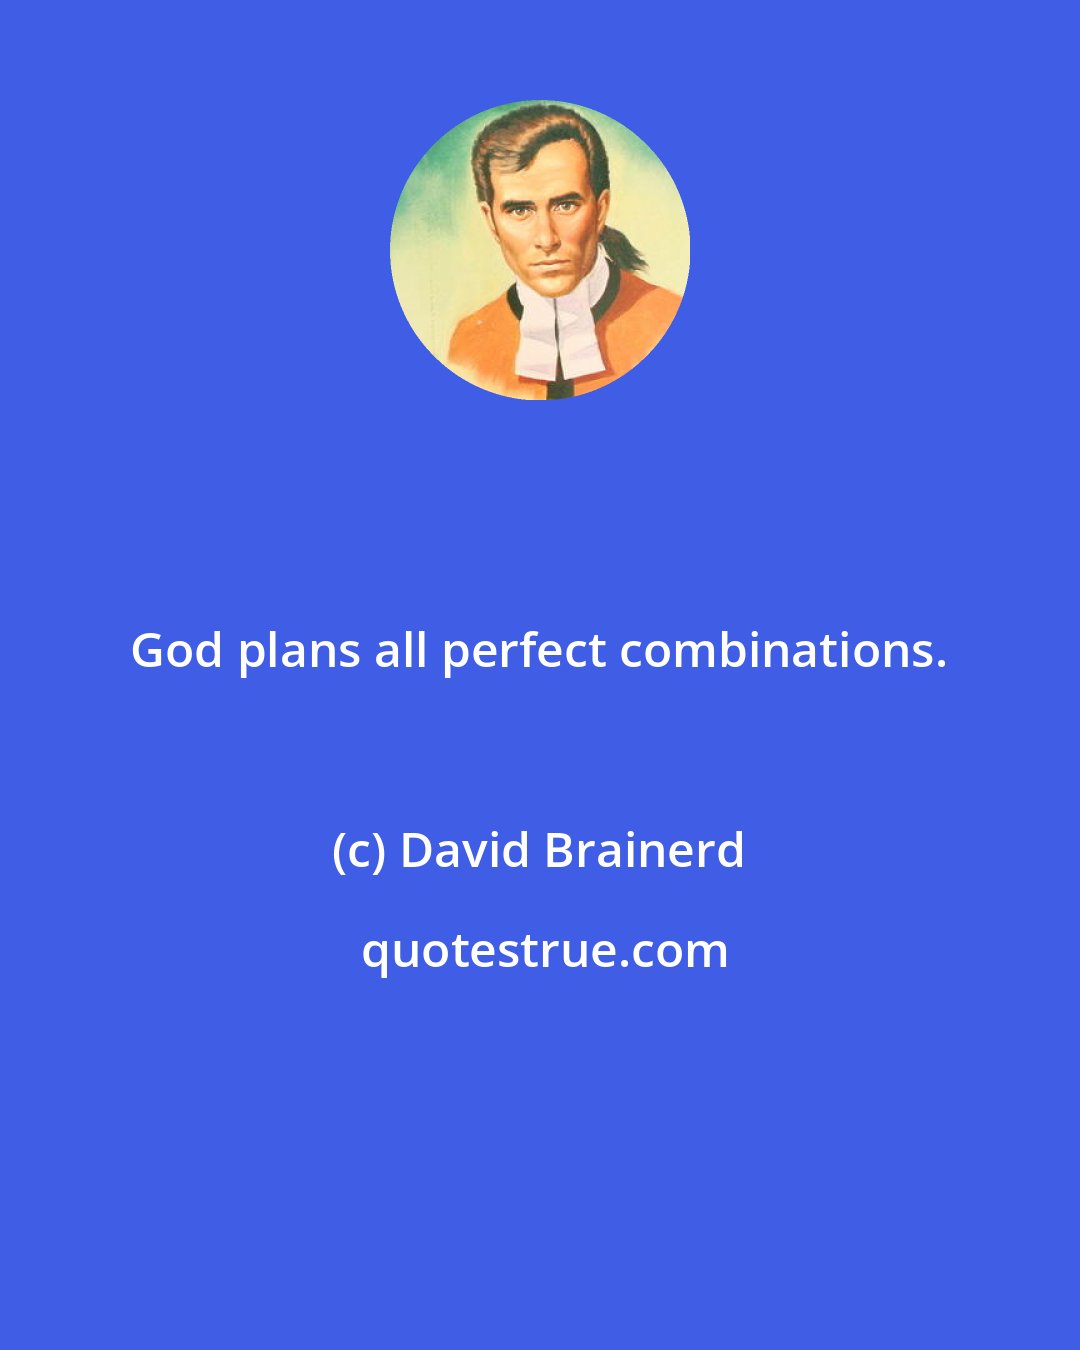 David Brainerd: God plans all perfect combinations.